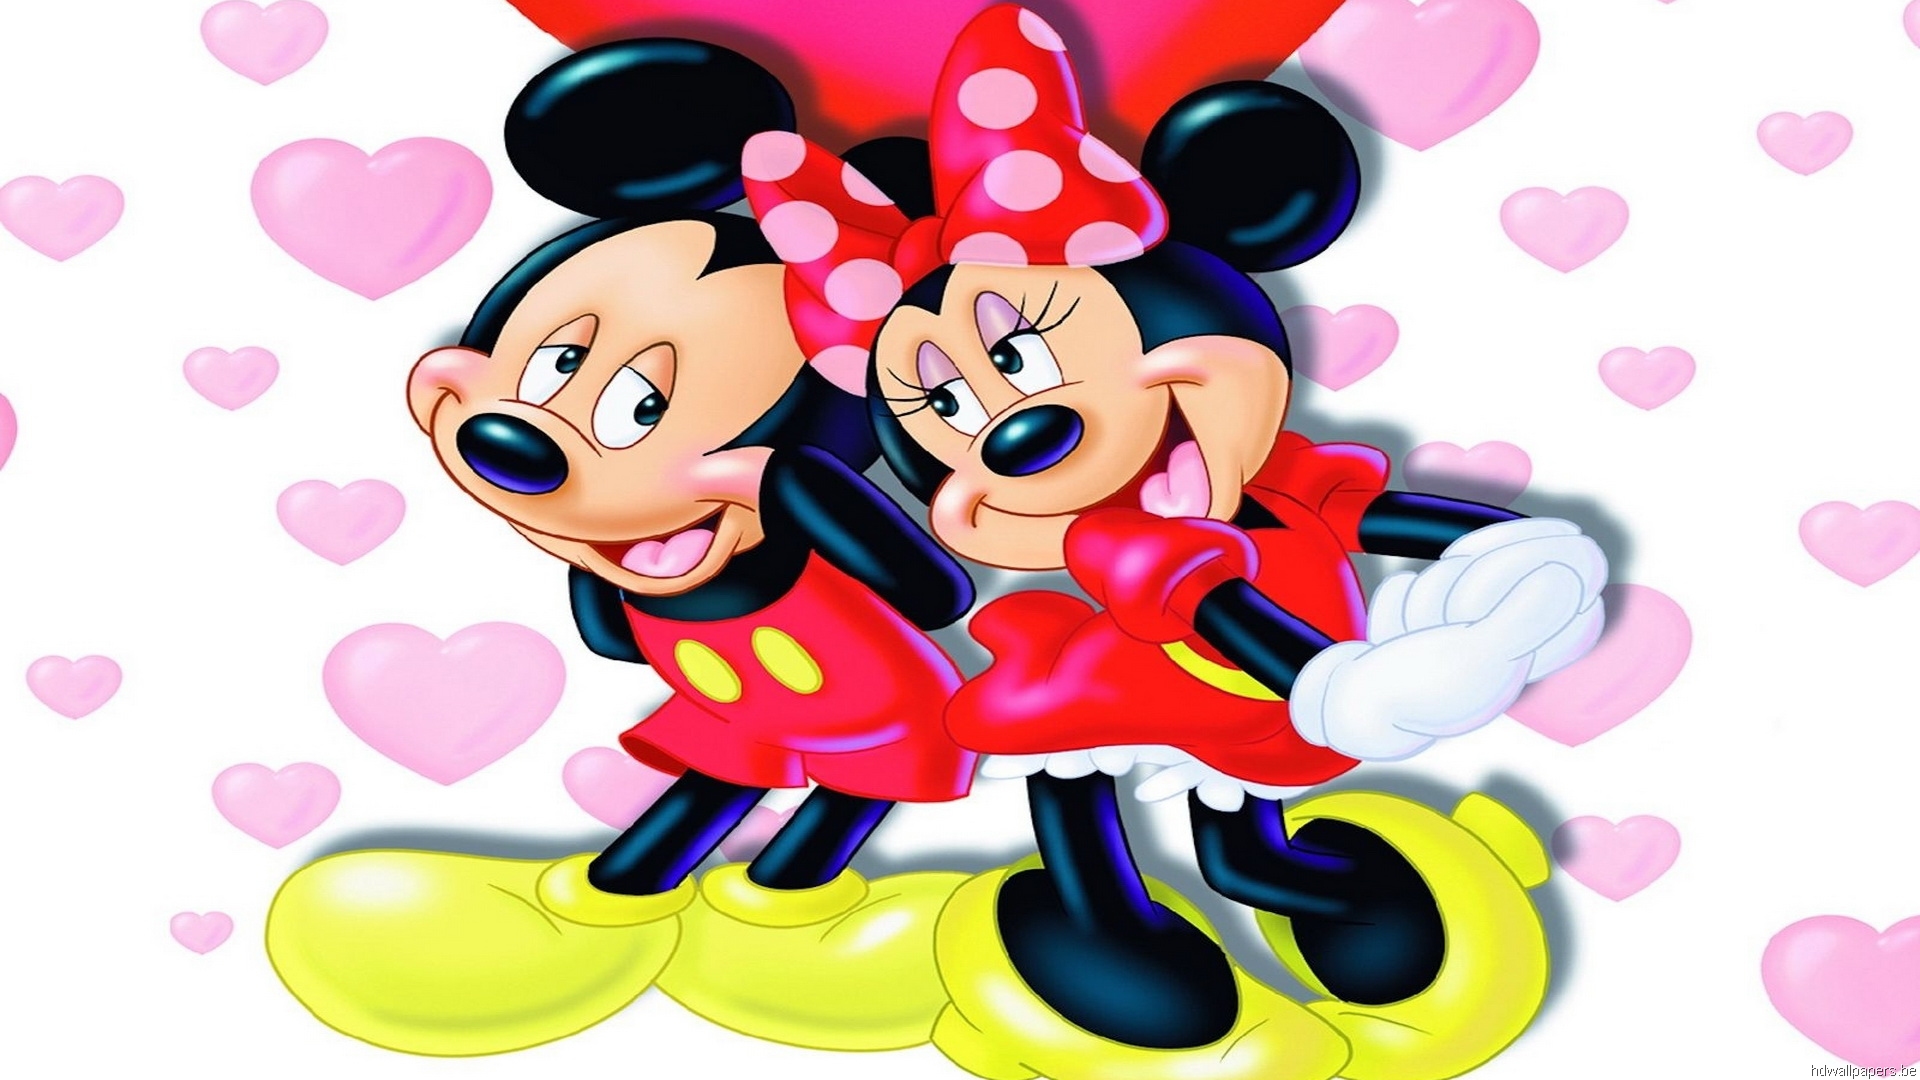 46+ Disney Valentine Desktop Wallpaper on WallpaperSafari